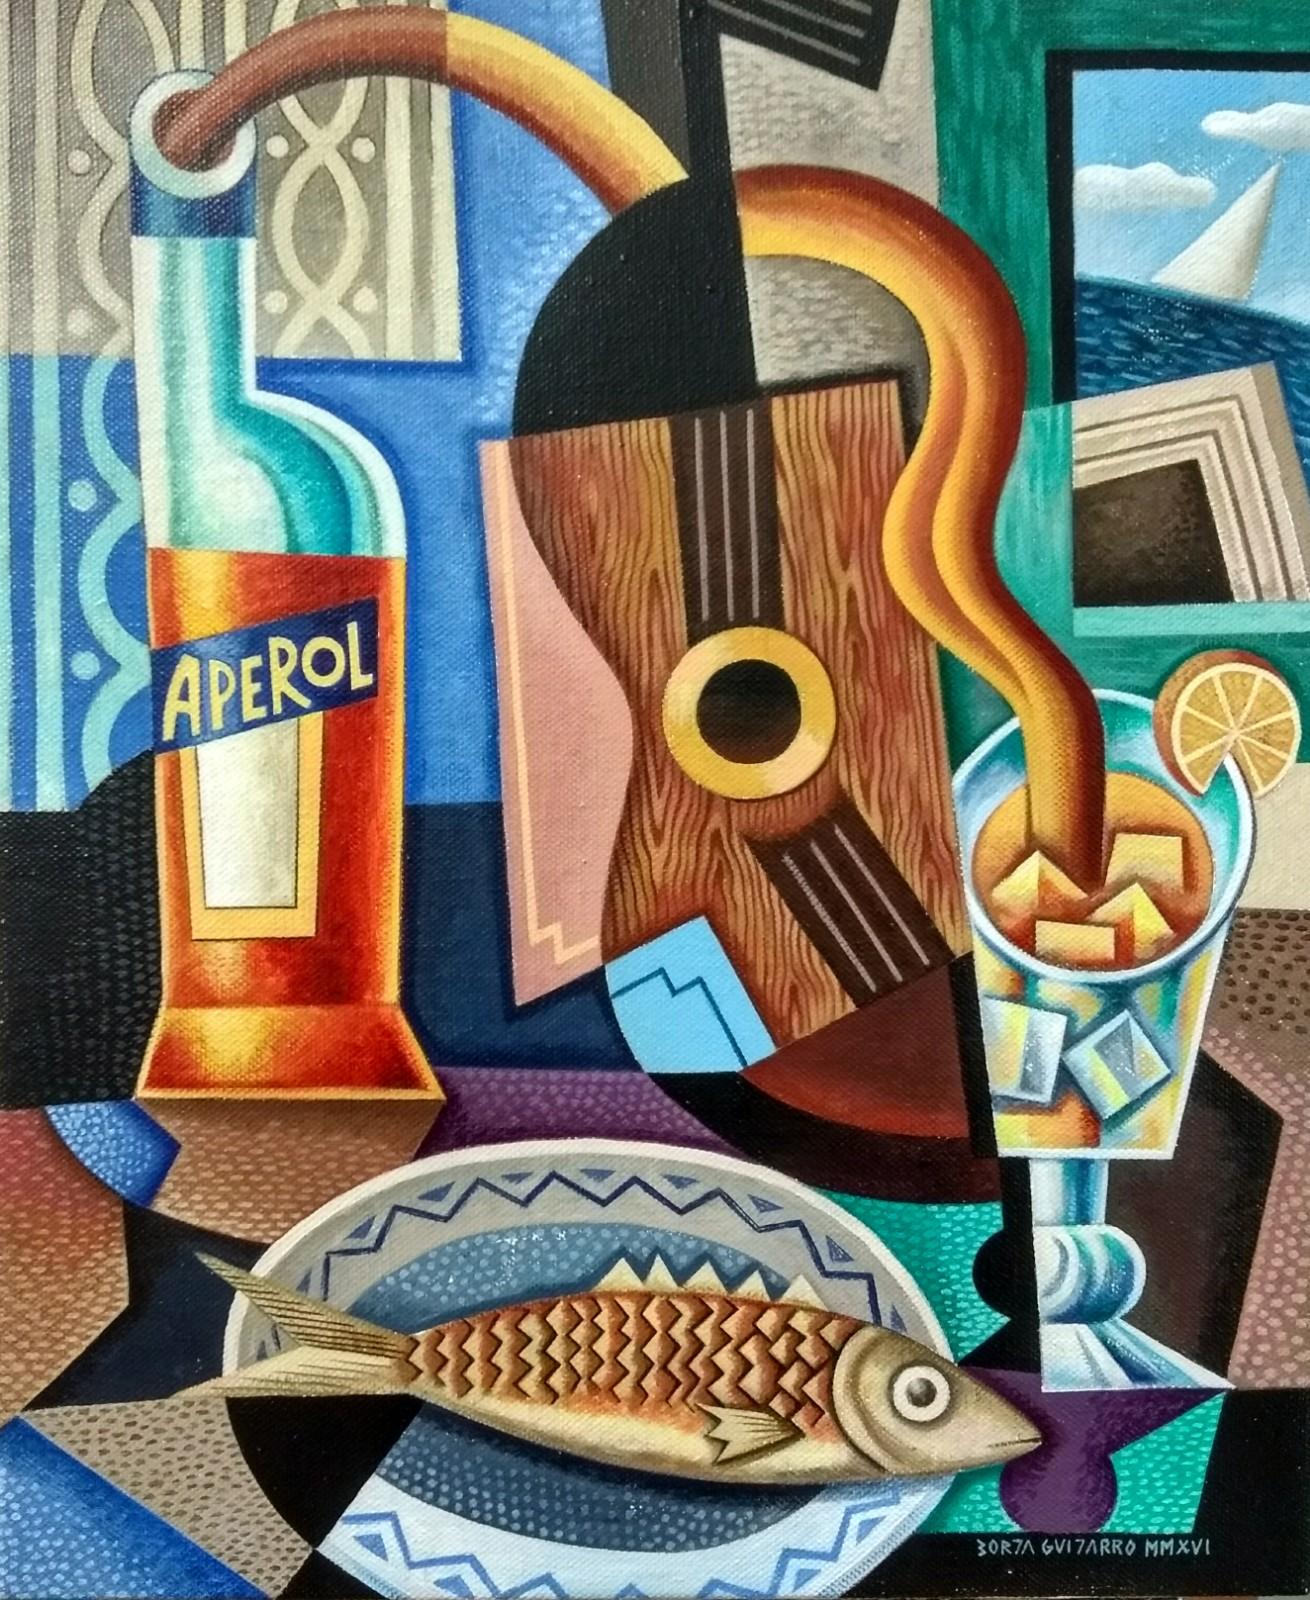 Aperol original still life cubism painting - Painting by Borja Guijarro